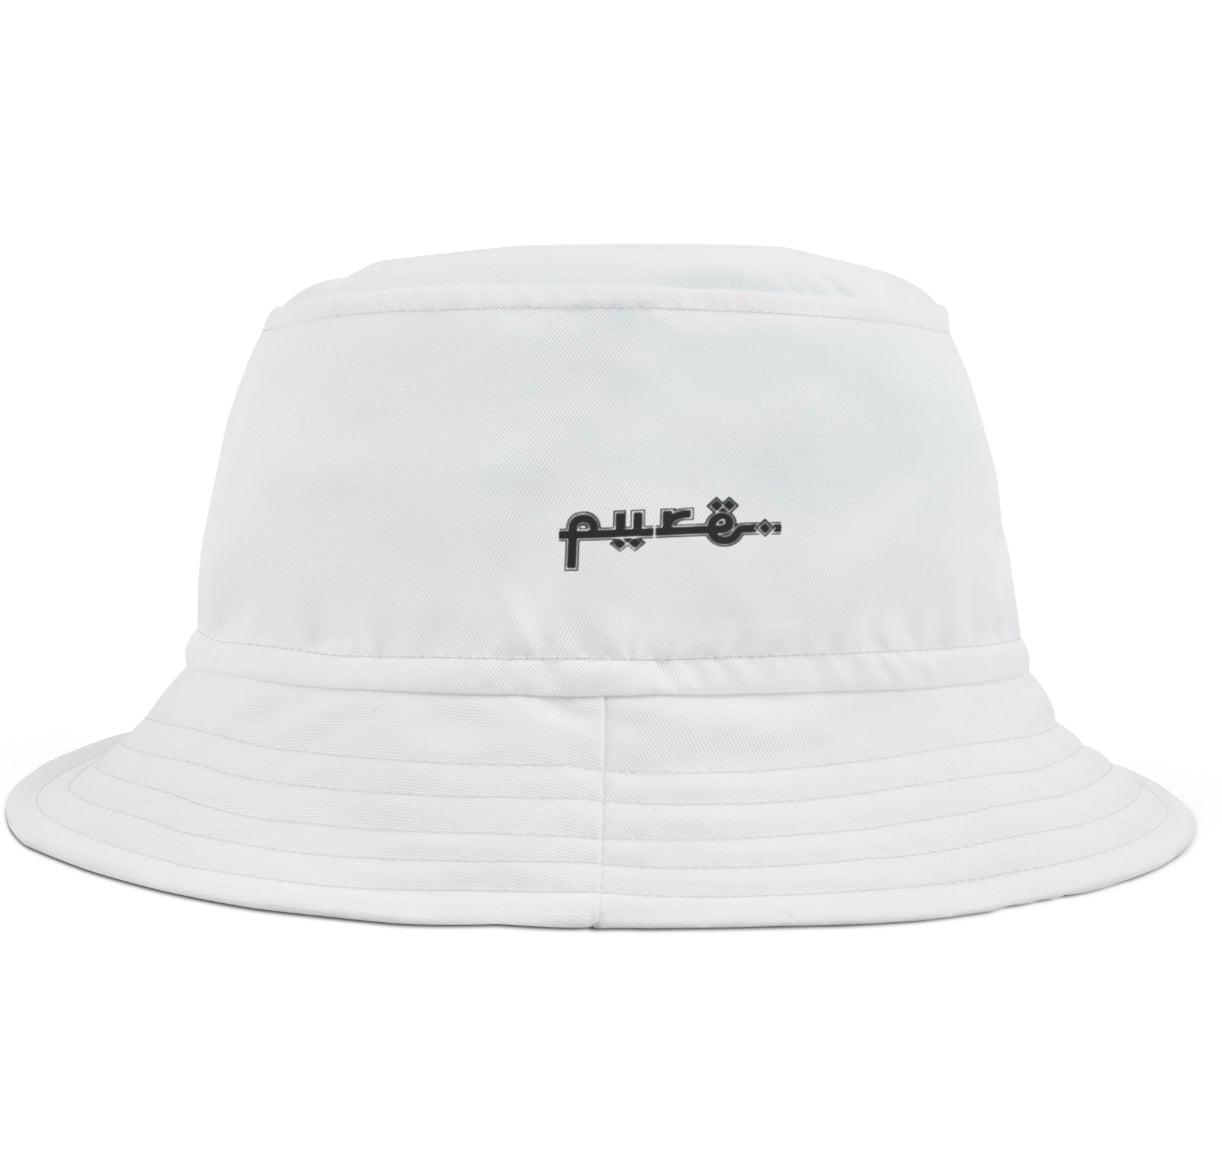 PURE.® HAT